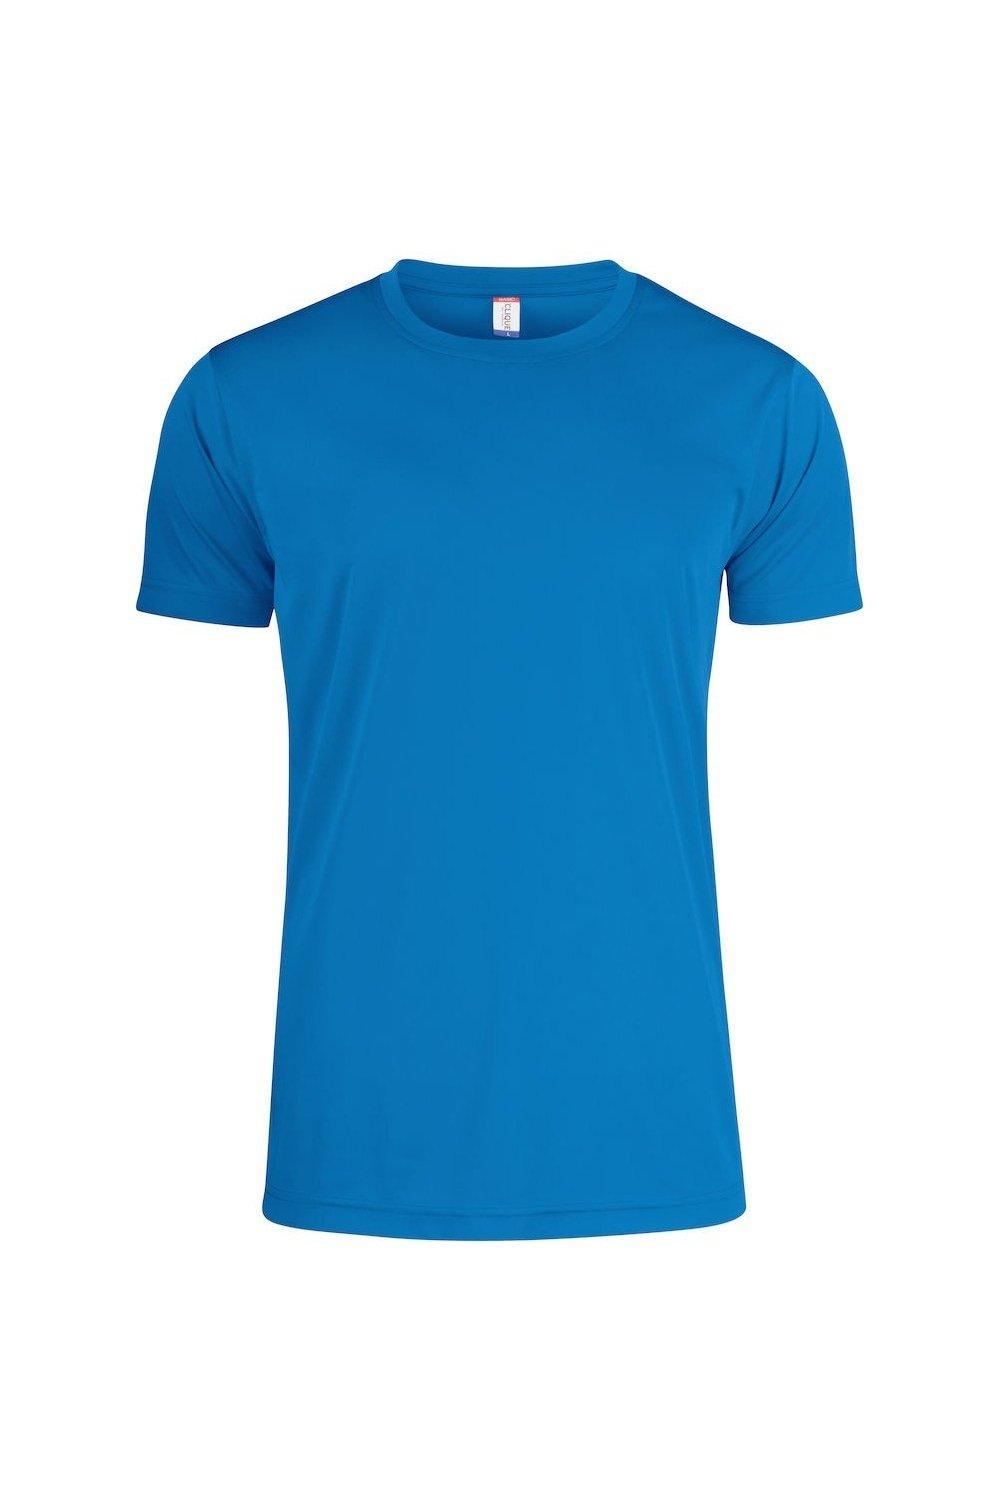 Активная футболка Clique, синий футболка clique с надписью 42 размер